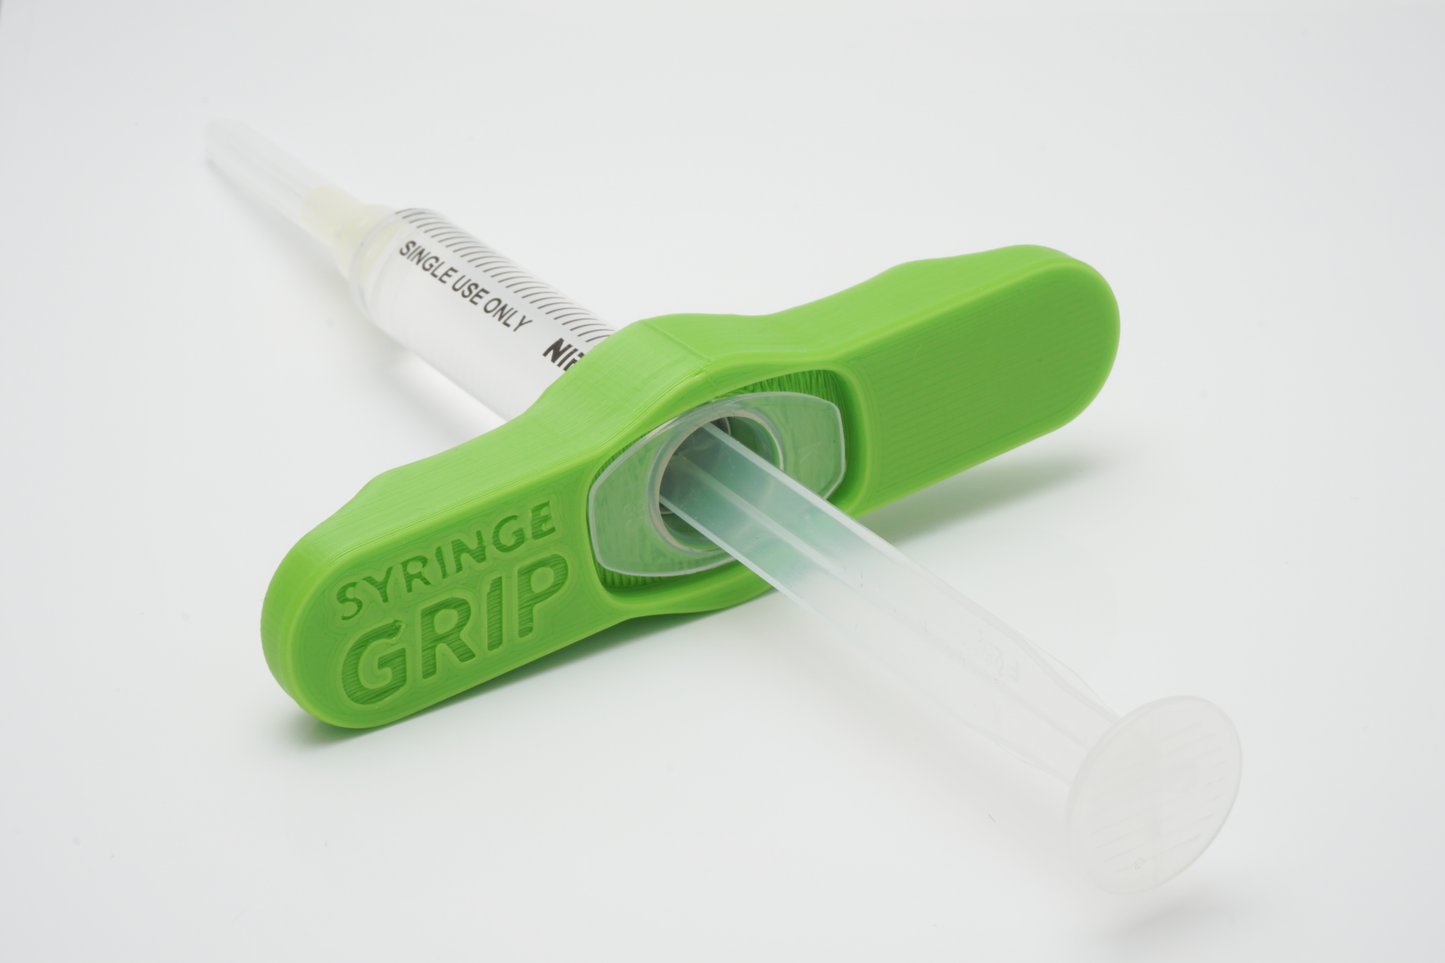 SyringeGrip | Green